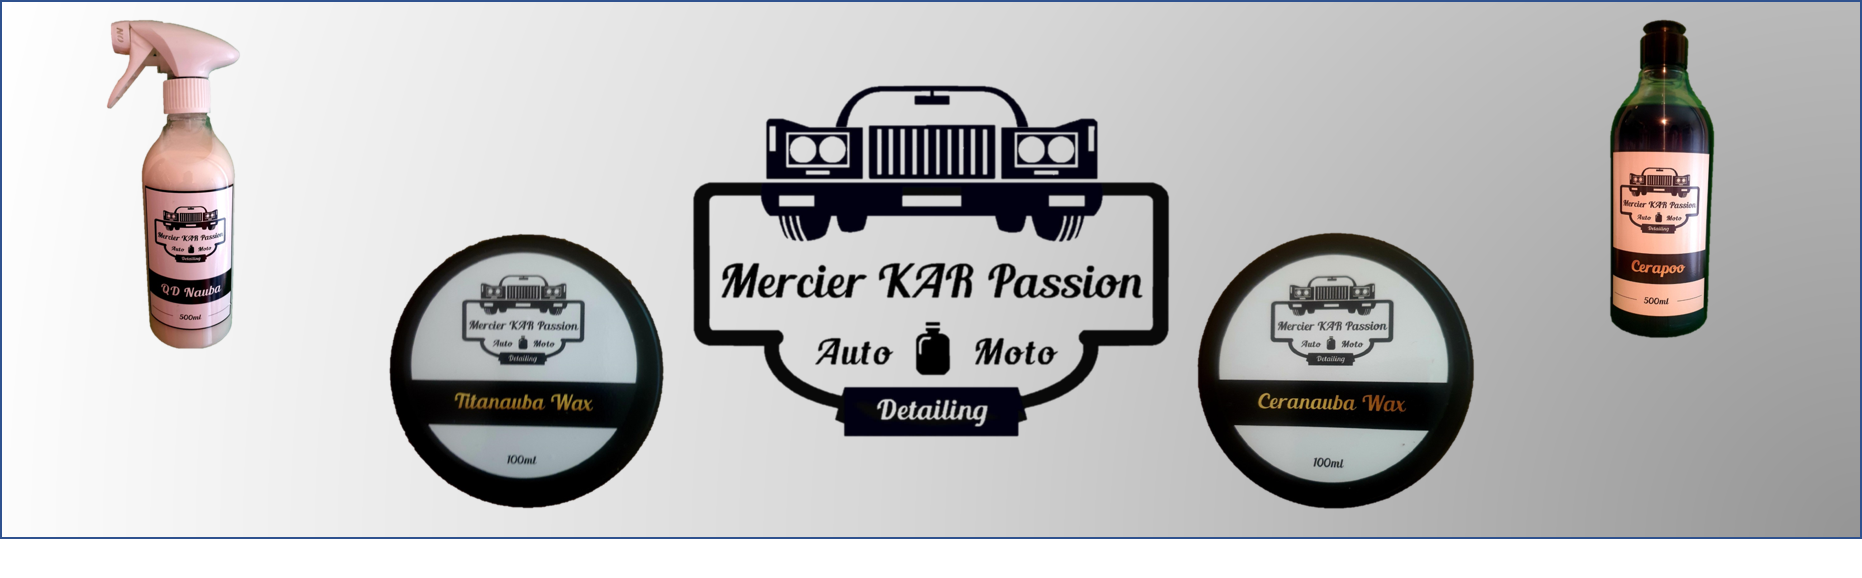 https://mercier-kar-passion.com/fr/126-mercier-kar-passion